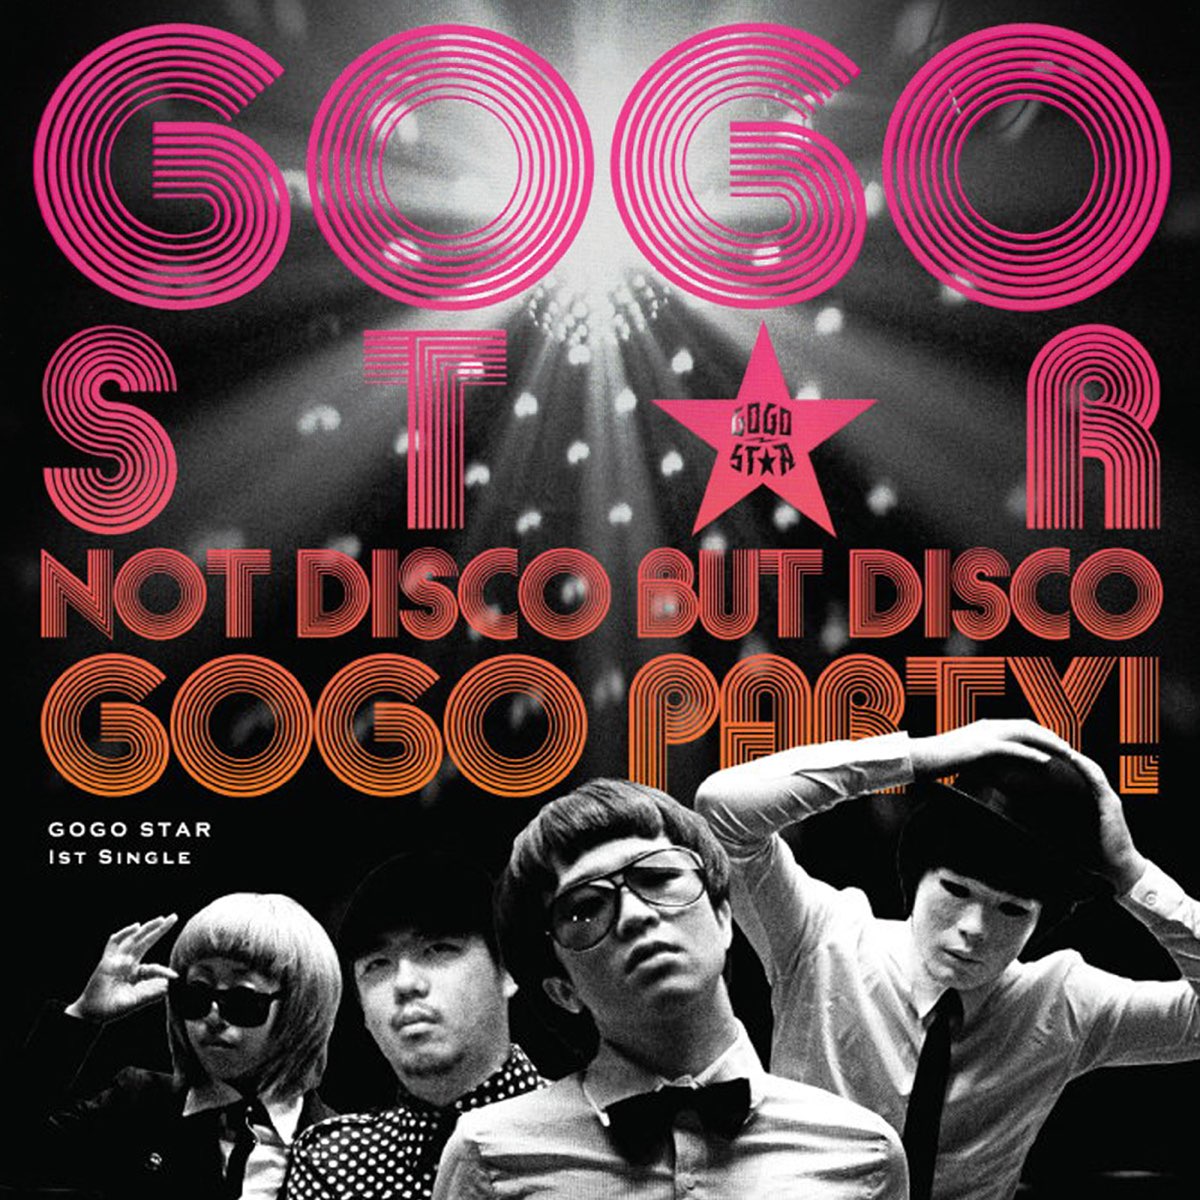 GoGo Party! - EP - Album by GOGOSTAR - Apple Music